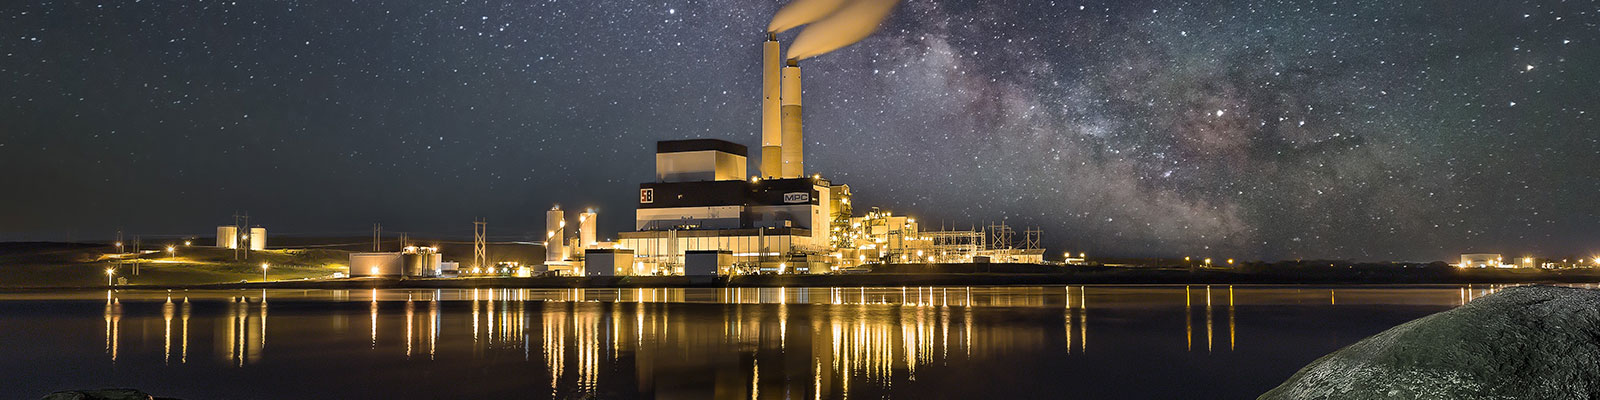 Coal plant at night